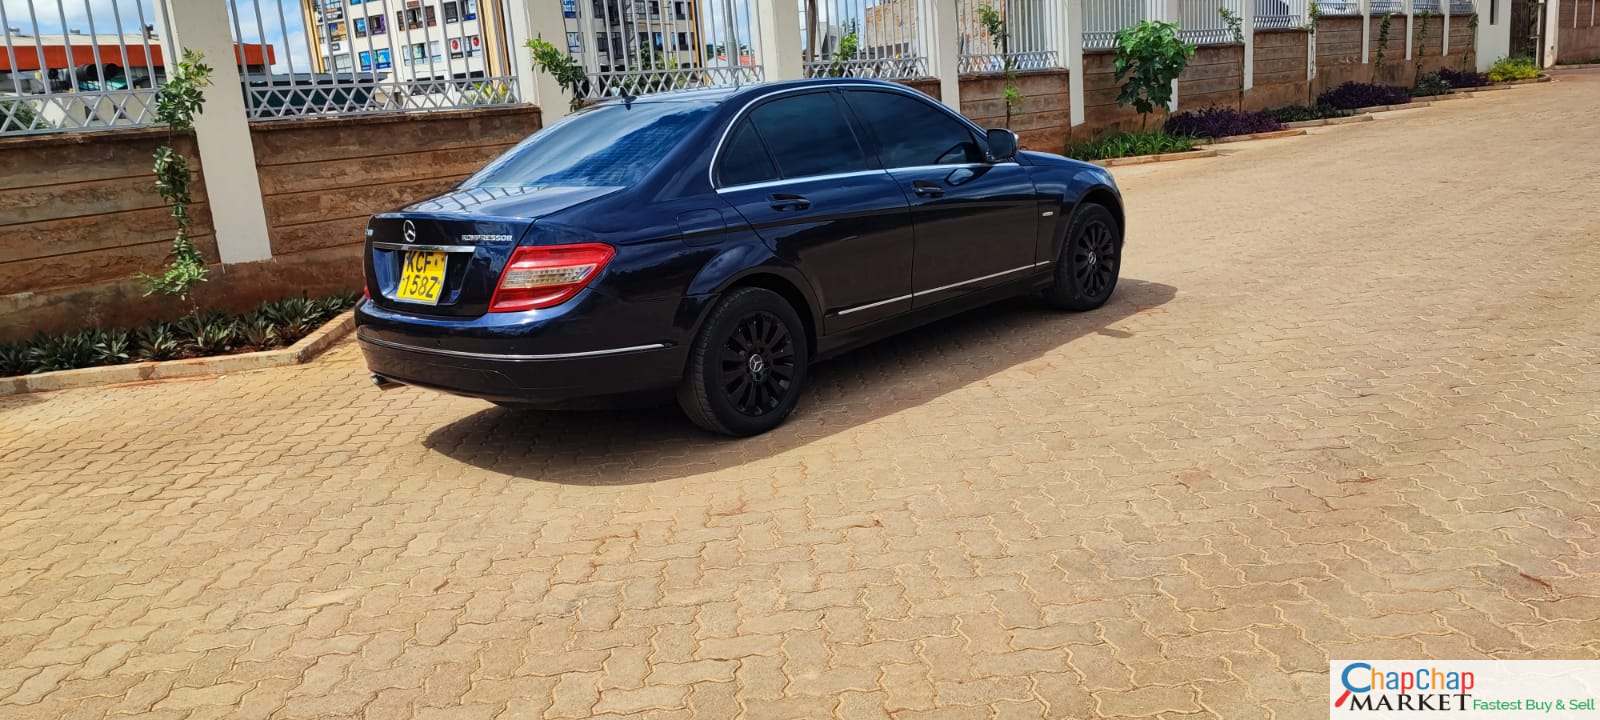 Mercedes Benz C200 for sale in Kenya ðŸ”¥ You Pay 30% DEPOSIT Trade in OK EXCLUSIVE